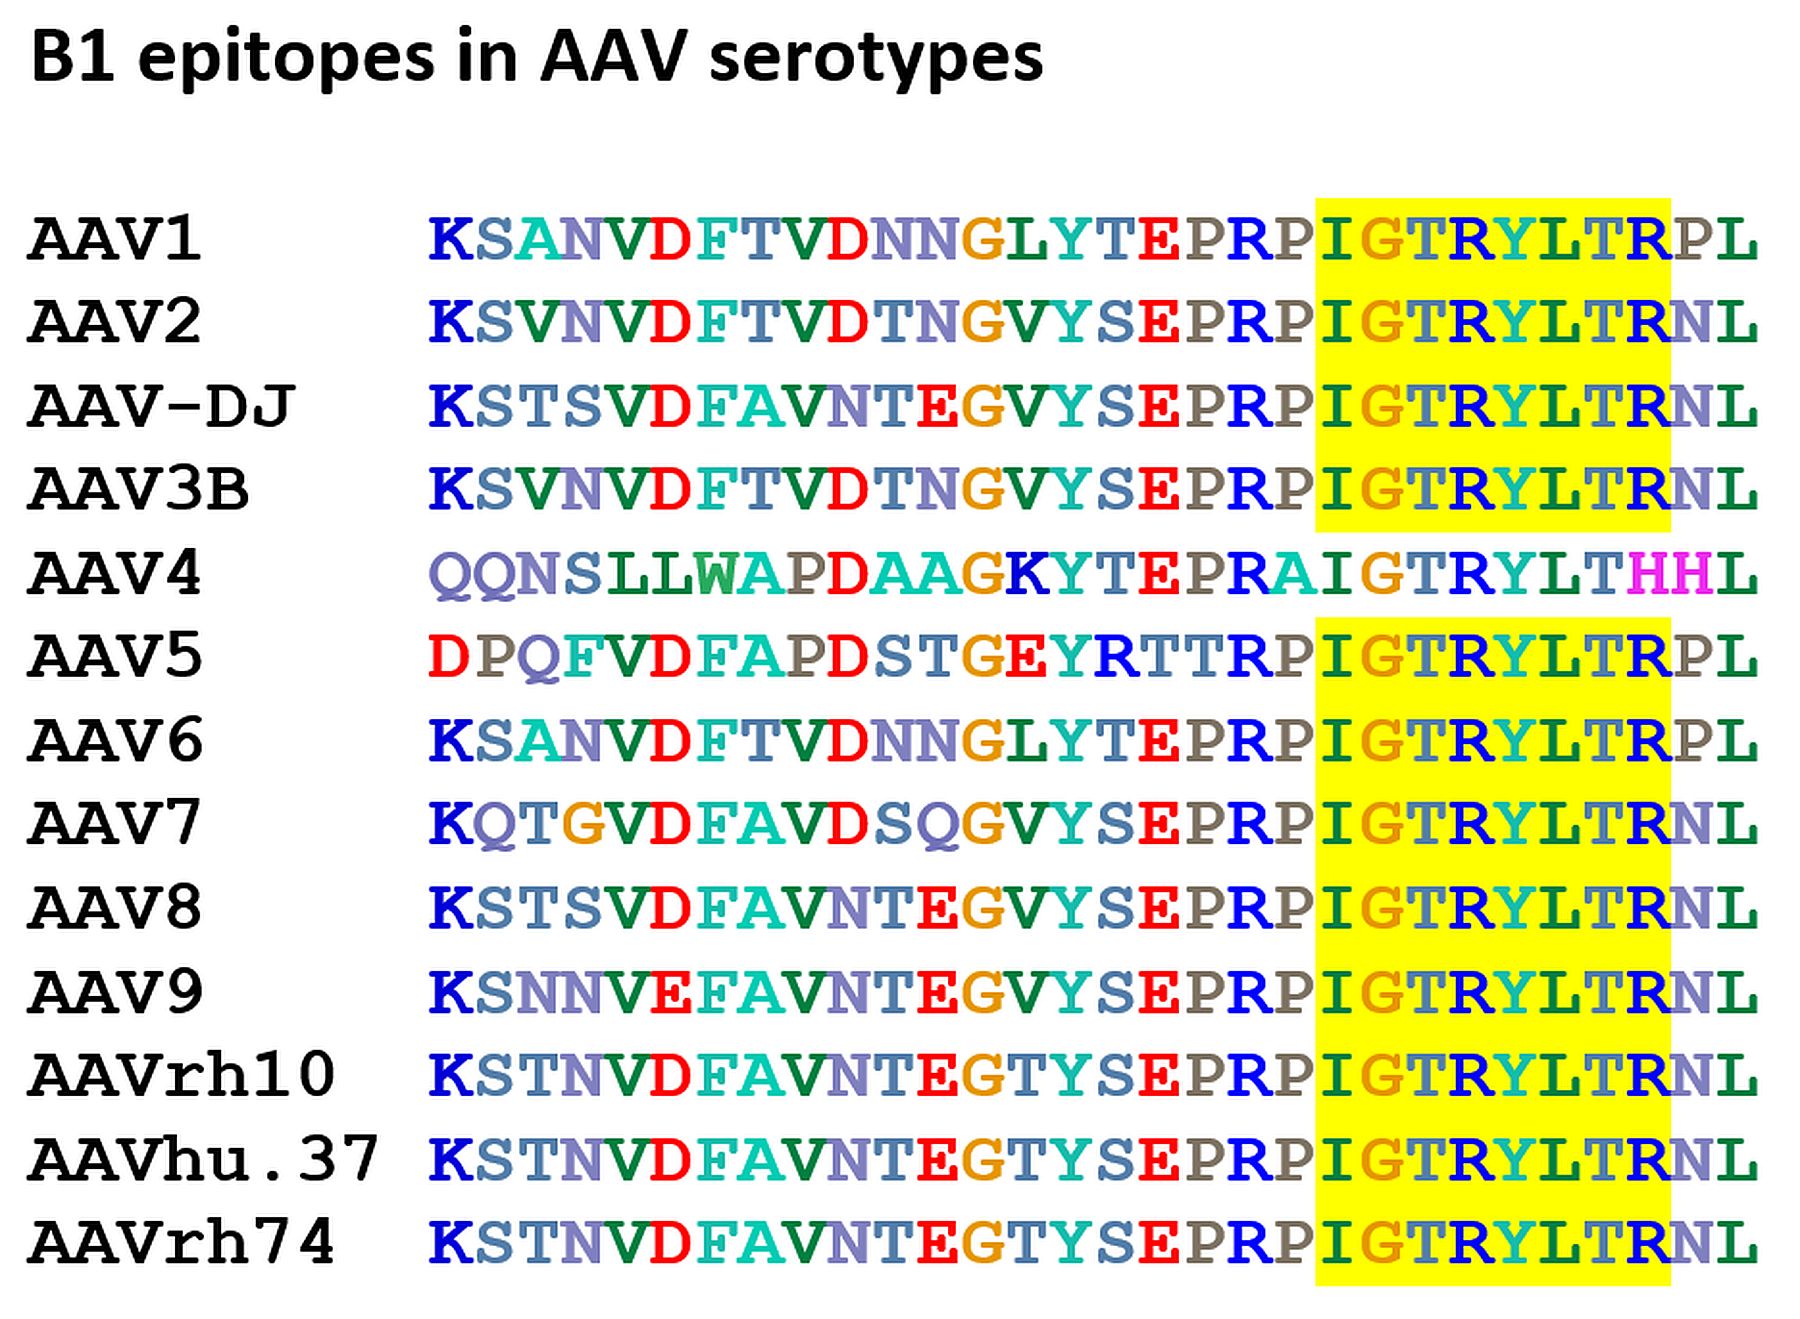 anti-AAV VP1/VP2/VP3 mouse monoclonal, B1, supernatant